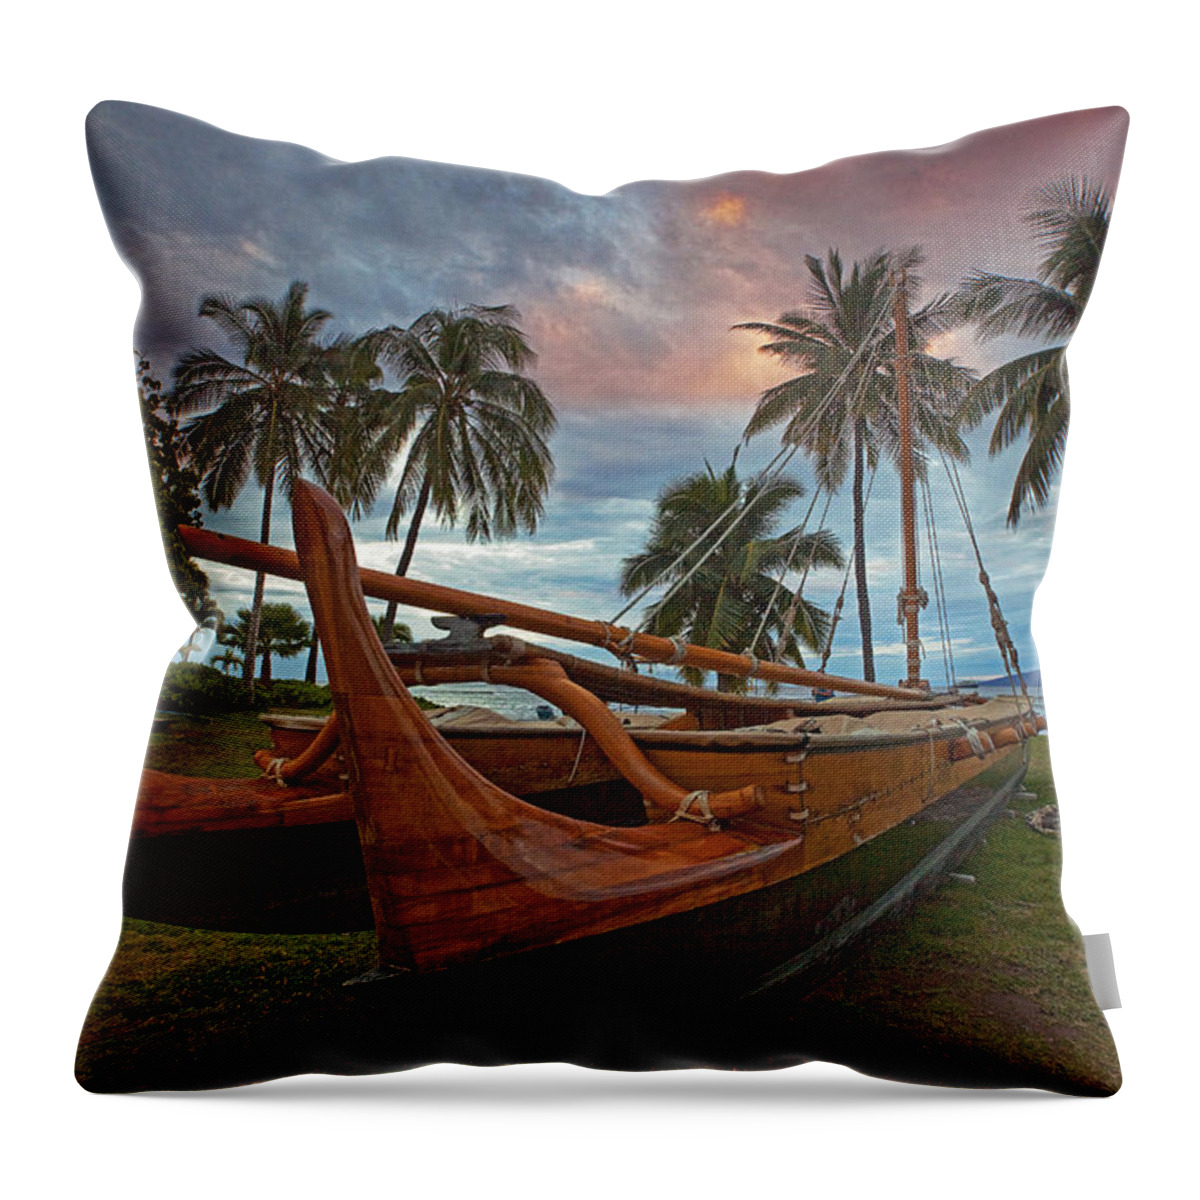 Maui Hawaii Sailing Canoe Palmtrees Sunset Throw Pillow featuring the photograph Hawaiian Sailing Canoe #1 by James Roemmling